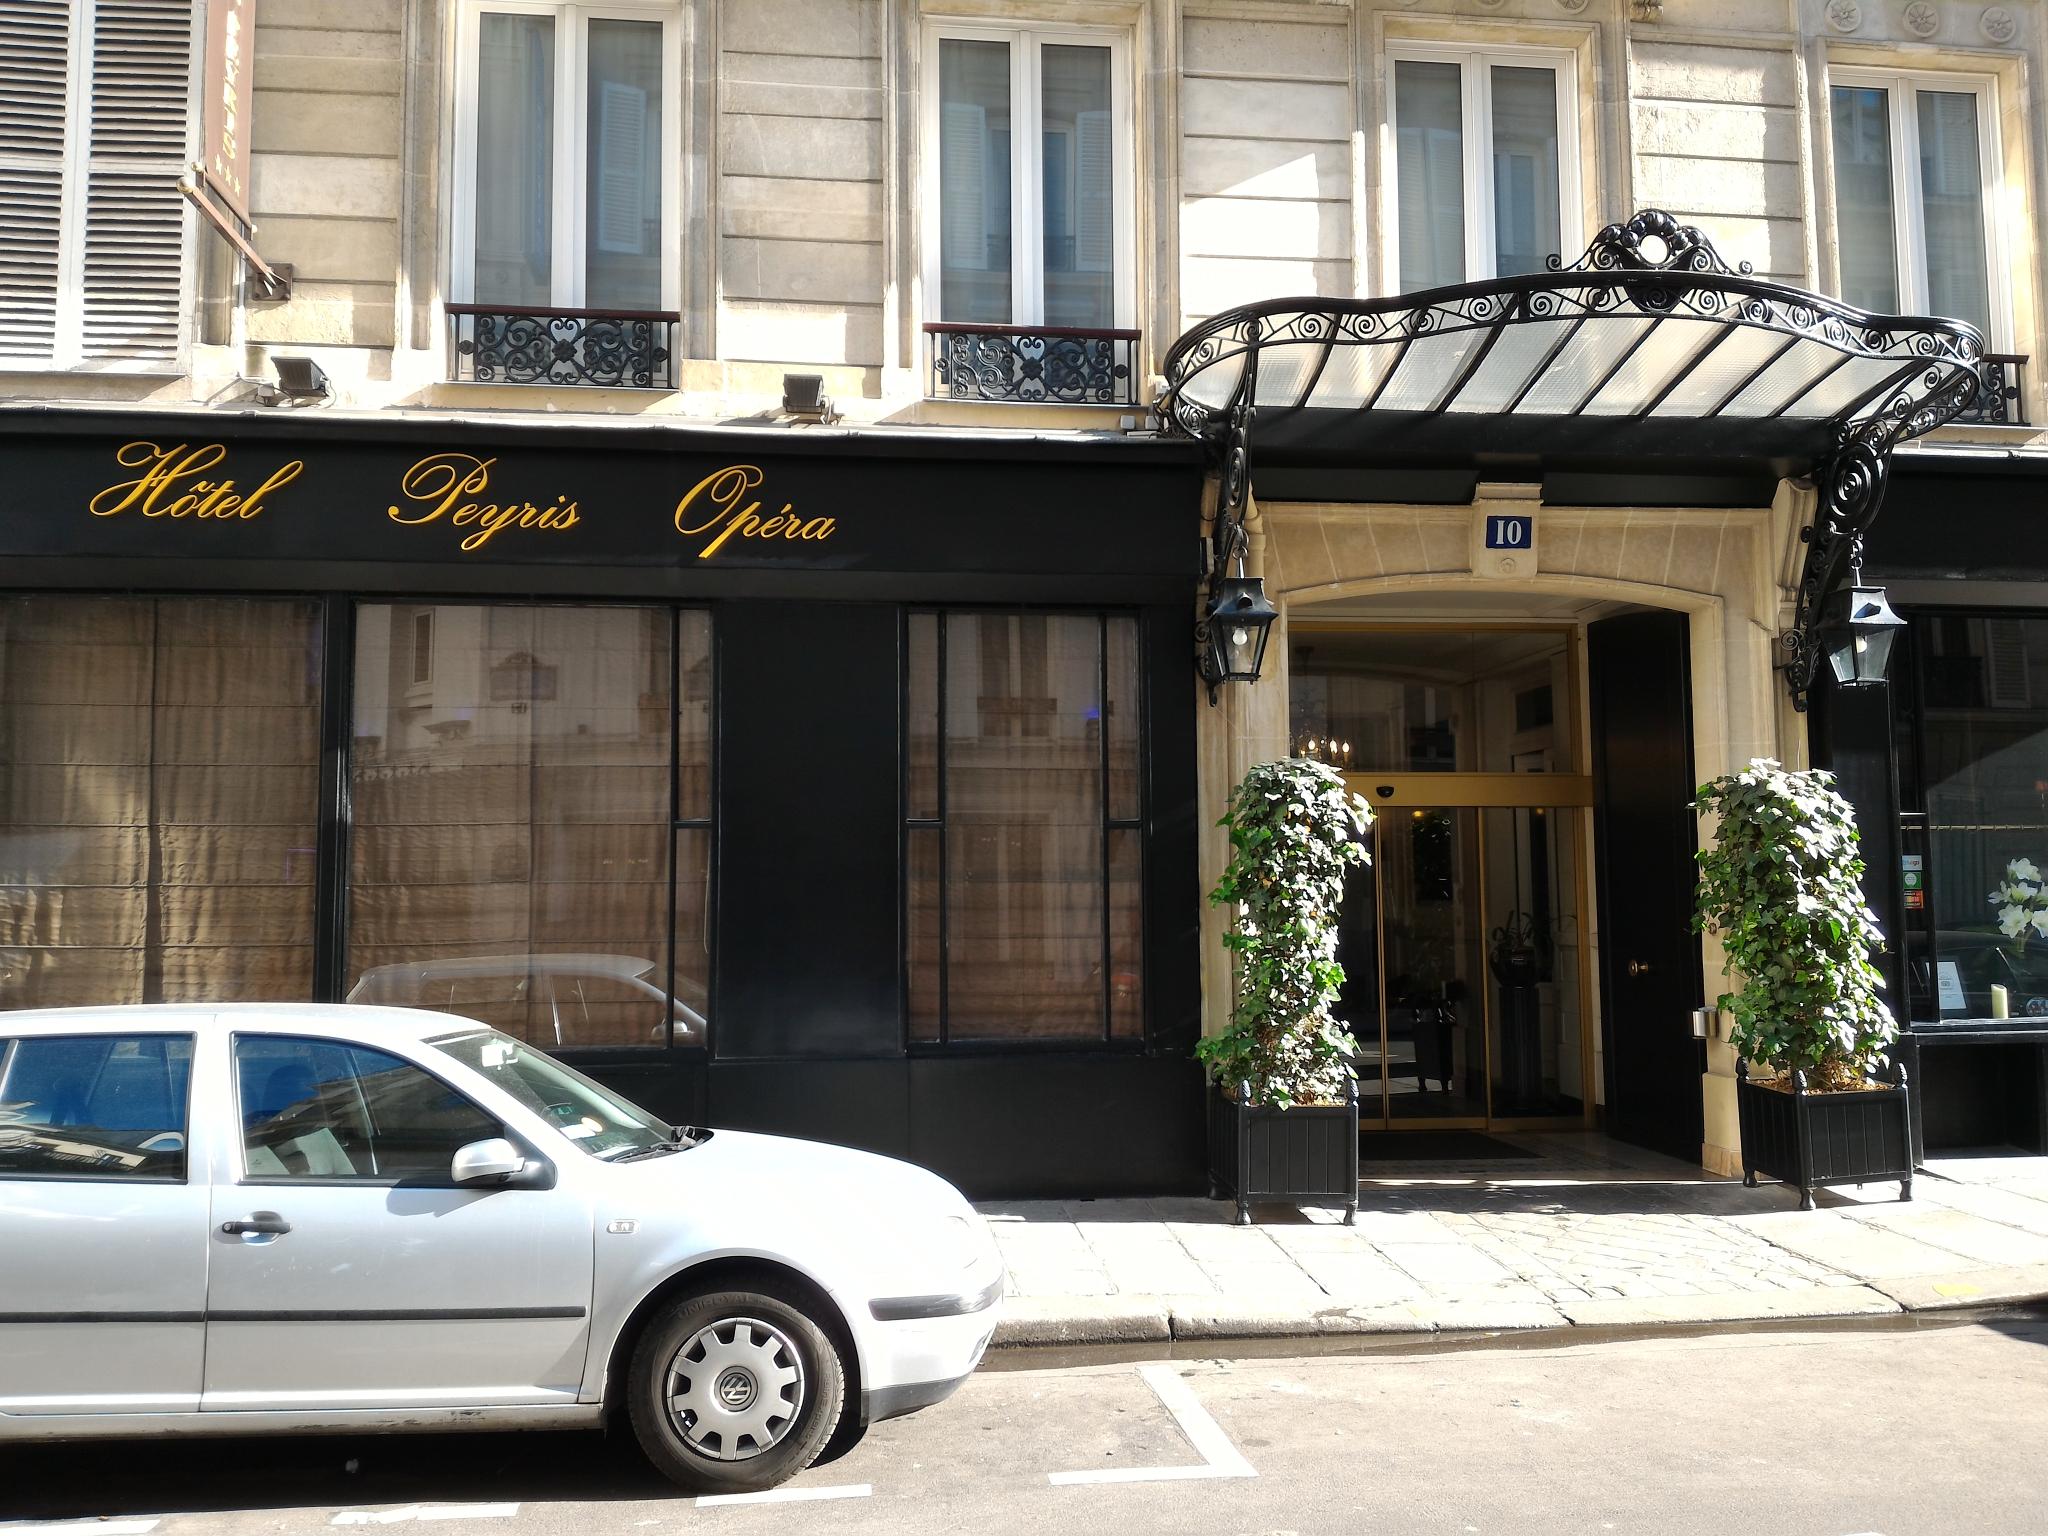 Hôtel Peyris Opéra | Paris | Hôtel Peyris Opéra, Paris - Galería de fotos 04 - 13